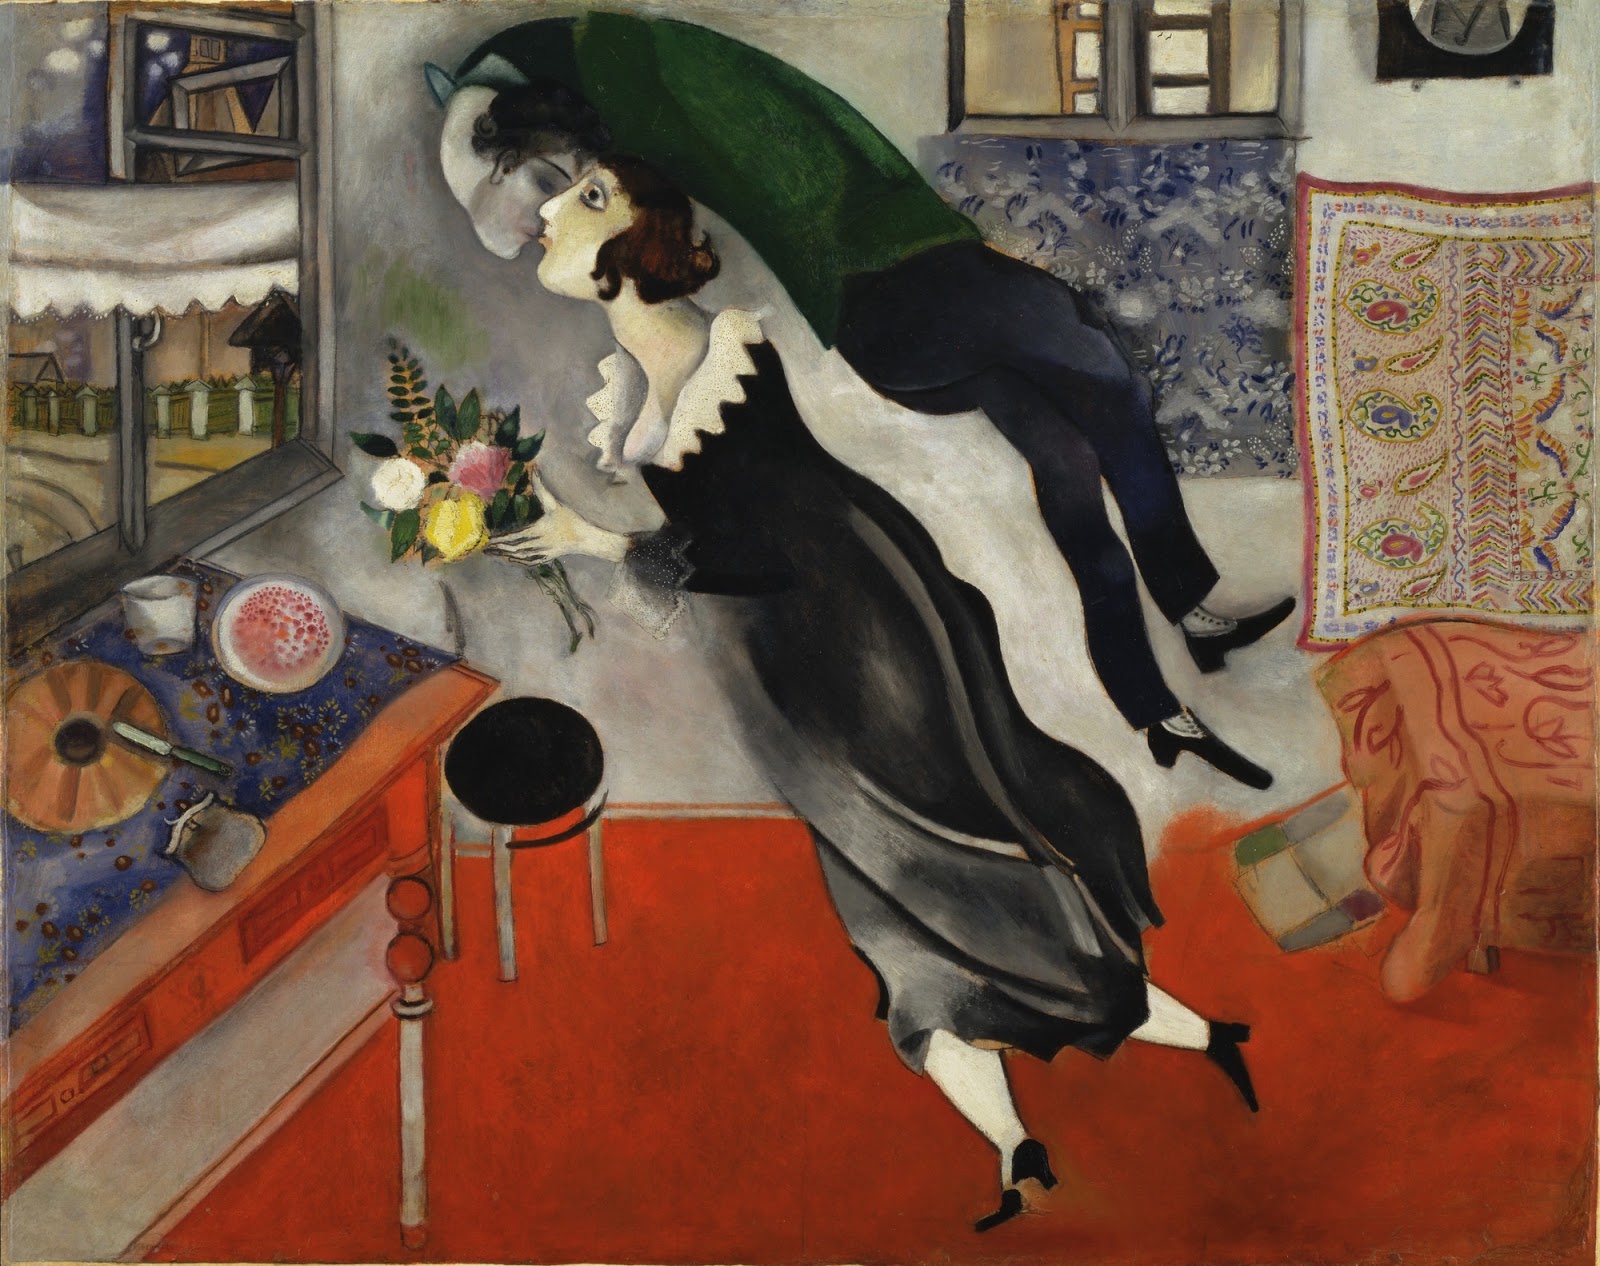 Marc+Chagall-1887-1985 (424).jpg